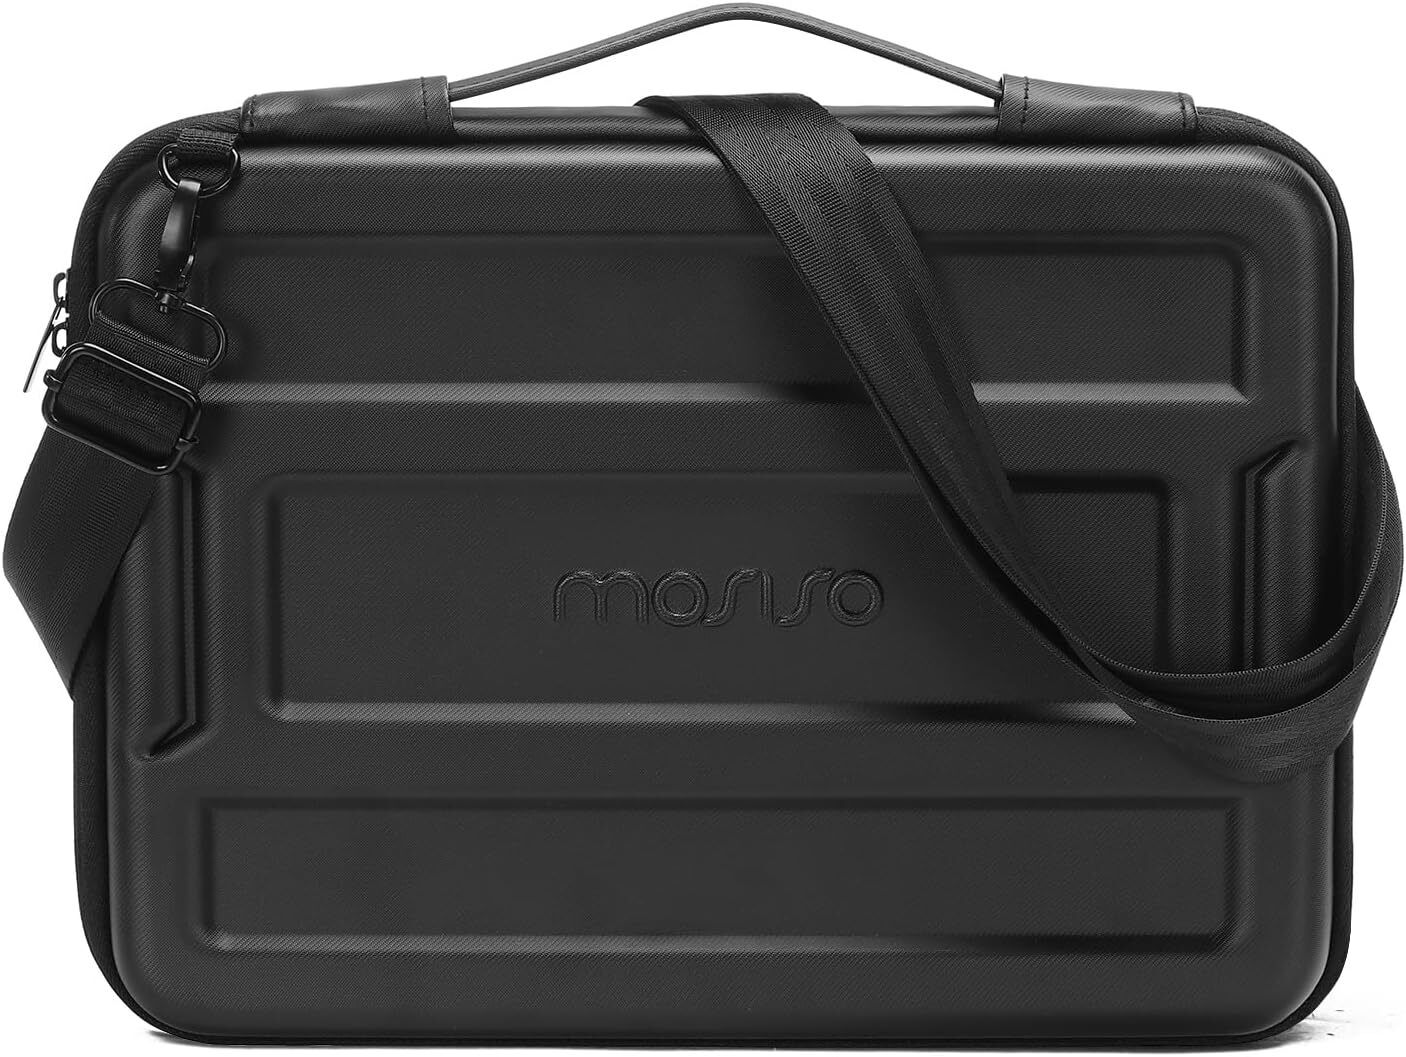 Waterproof Laptop Shoulder Bag for MacBook Air Pro 13 inch Carrying Sleeve Case